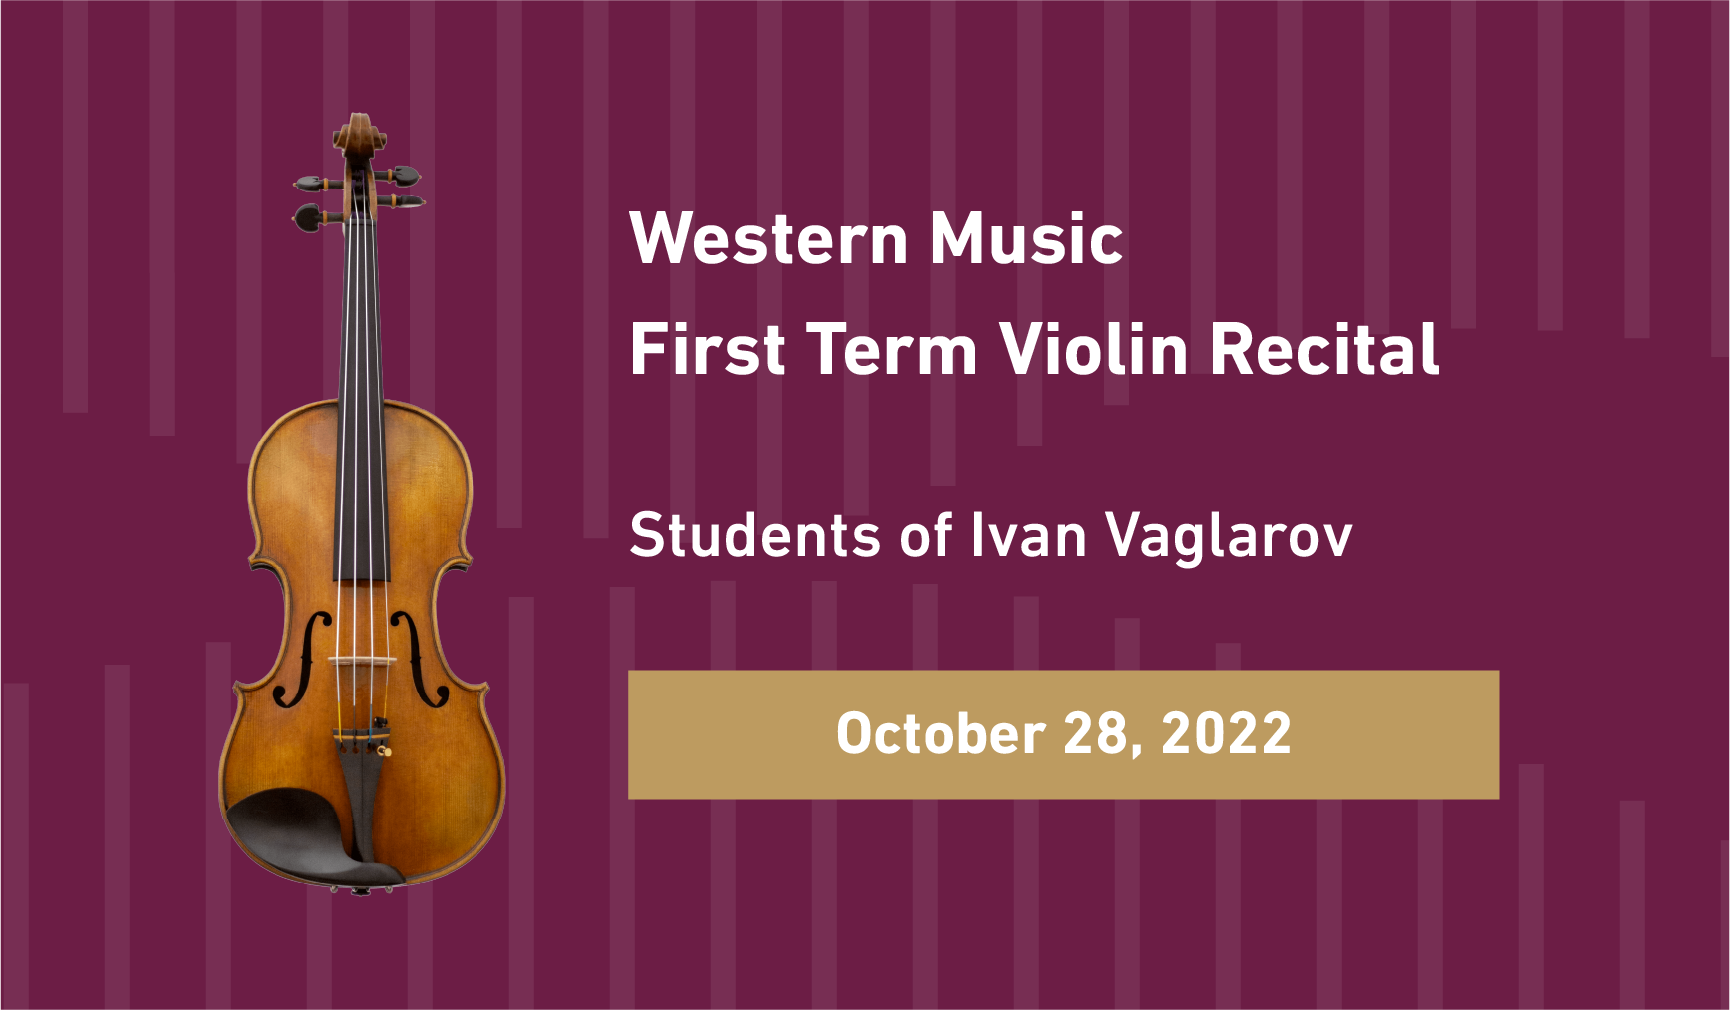 Photo reads: Violin First Term Rectial, Students of Ivan Vaglarov, October 28, 2022